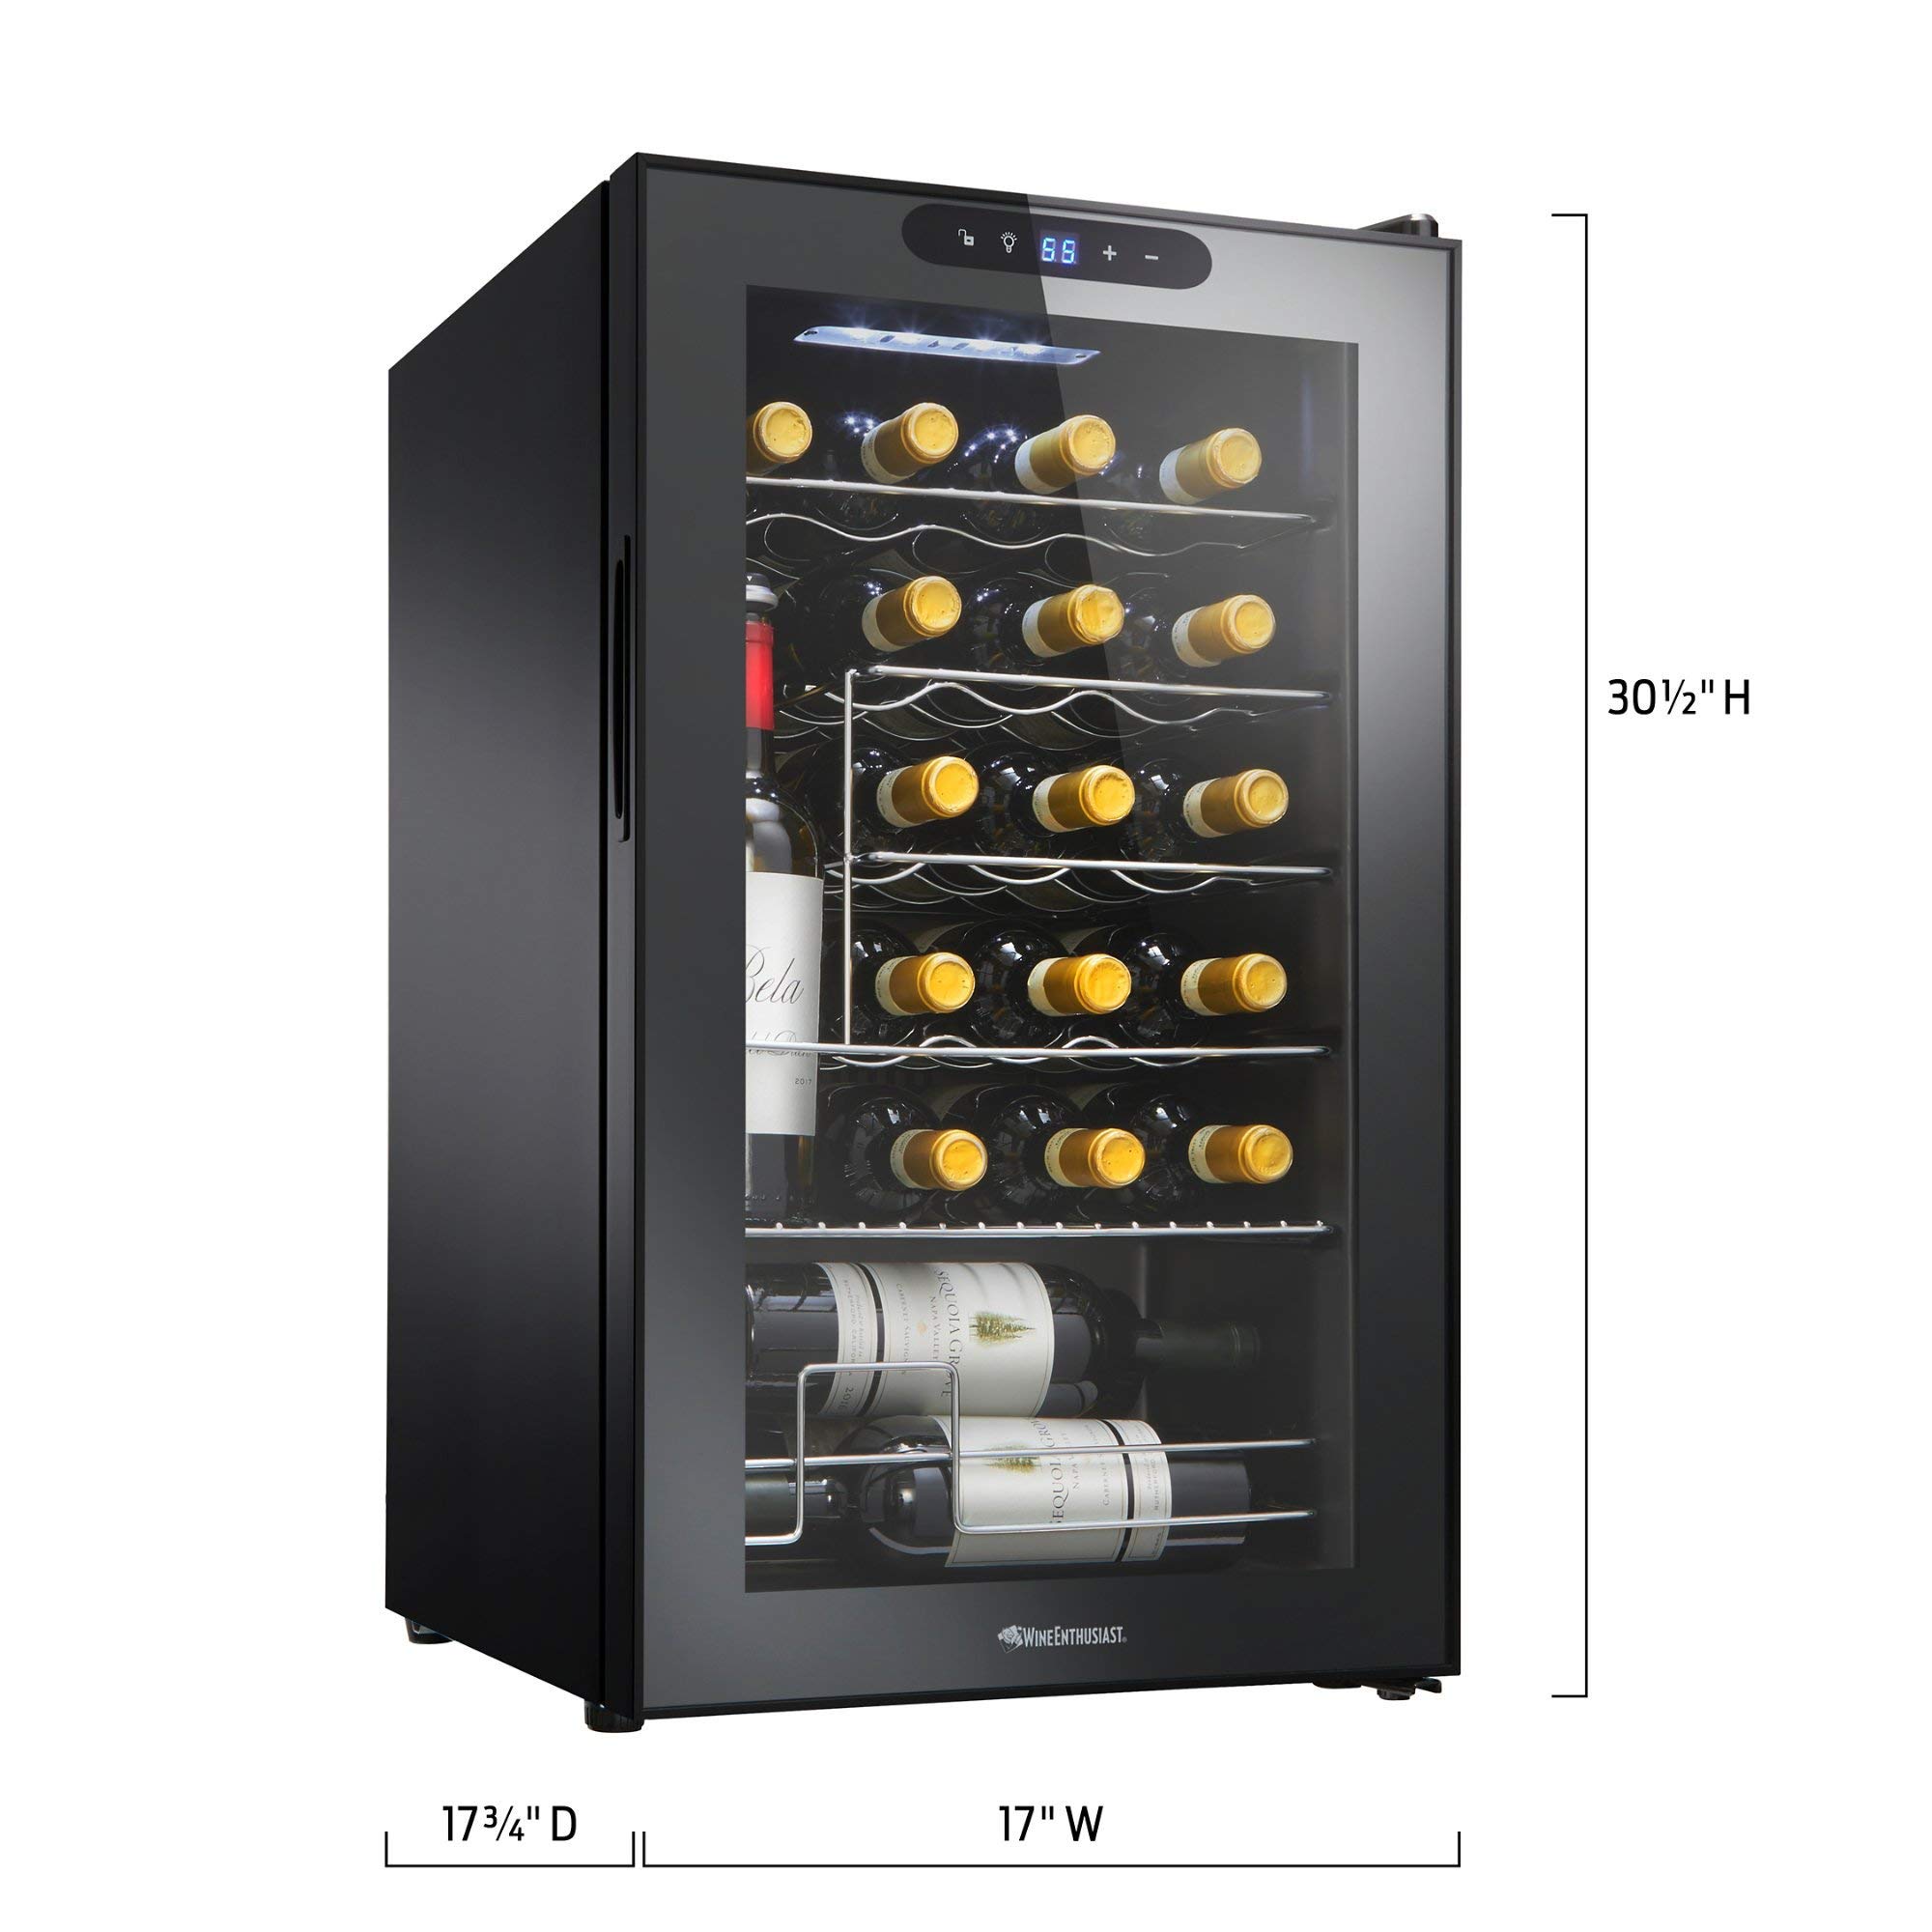 Wine Enthusiast 24-Bottle Compressor Wine Cooler with Upright Bottle Storage